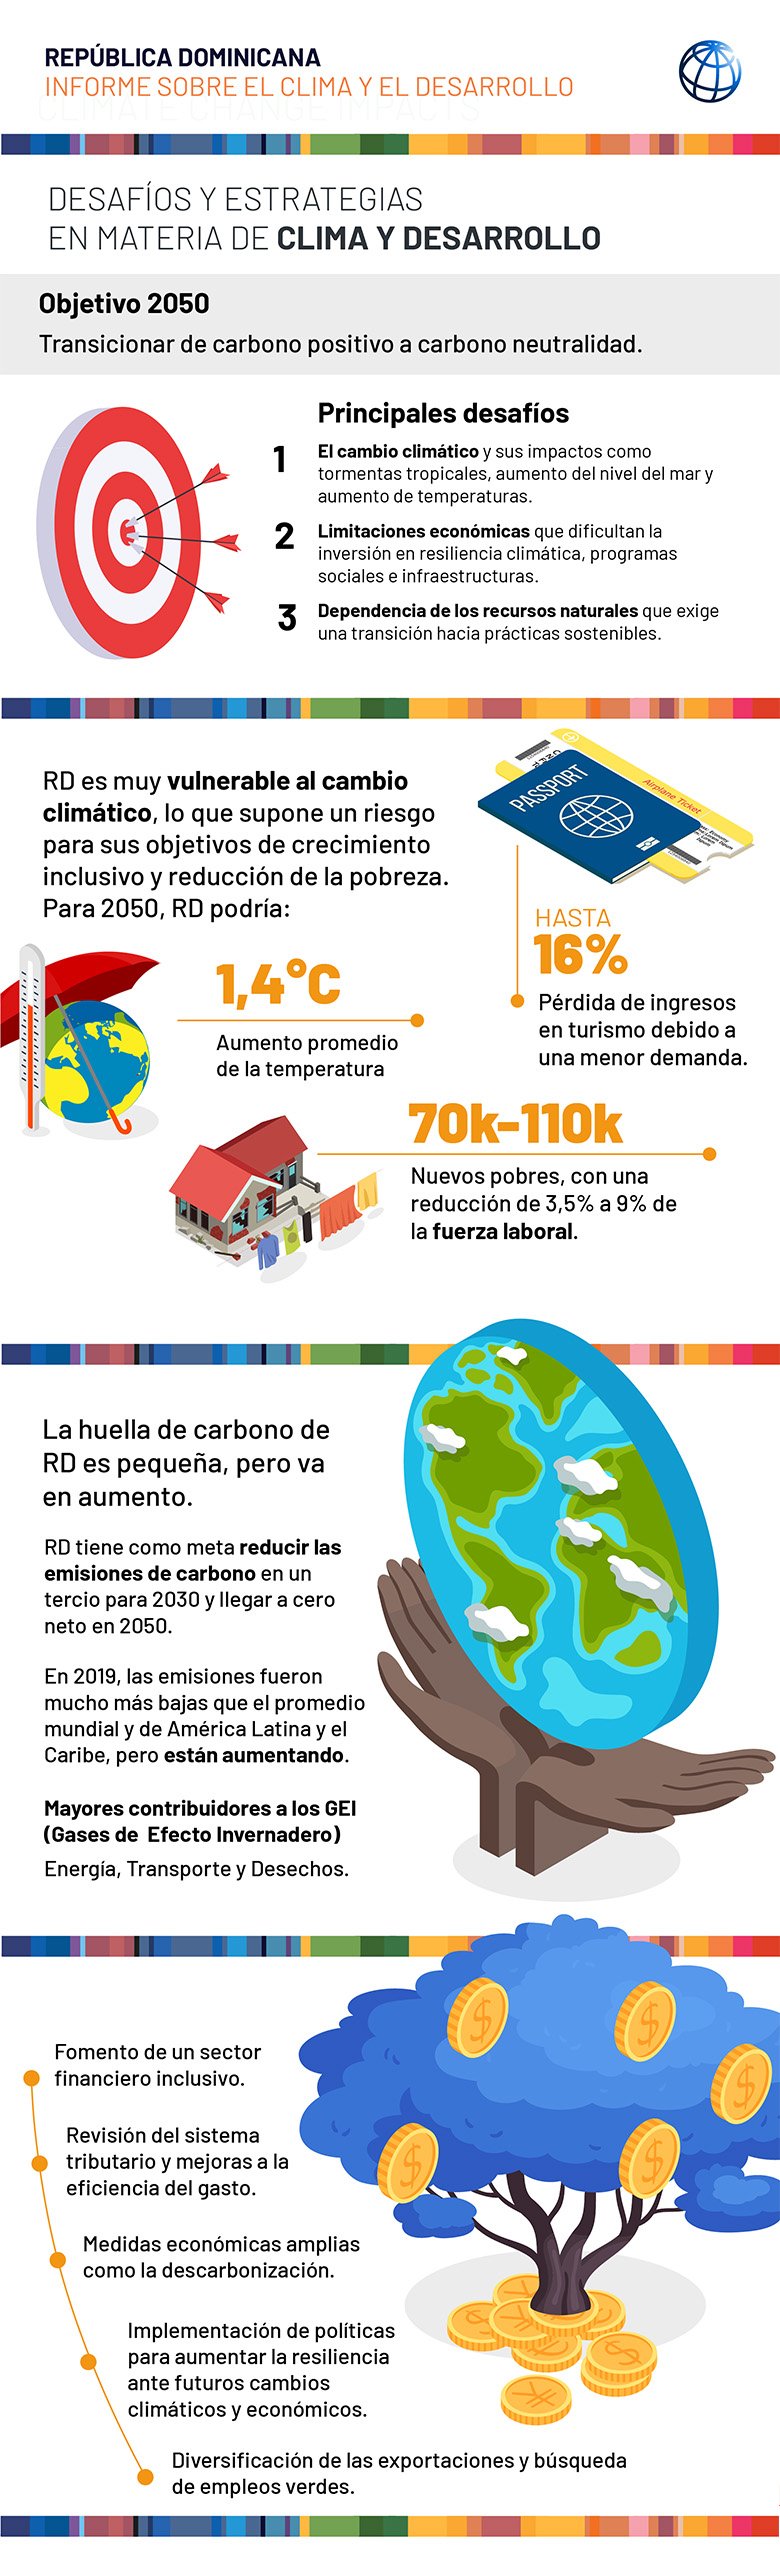 DRCCDR Infographic 1 Spanish